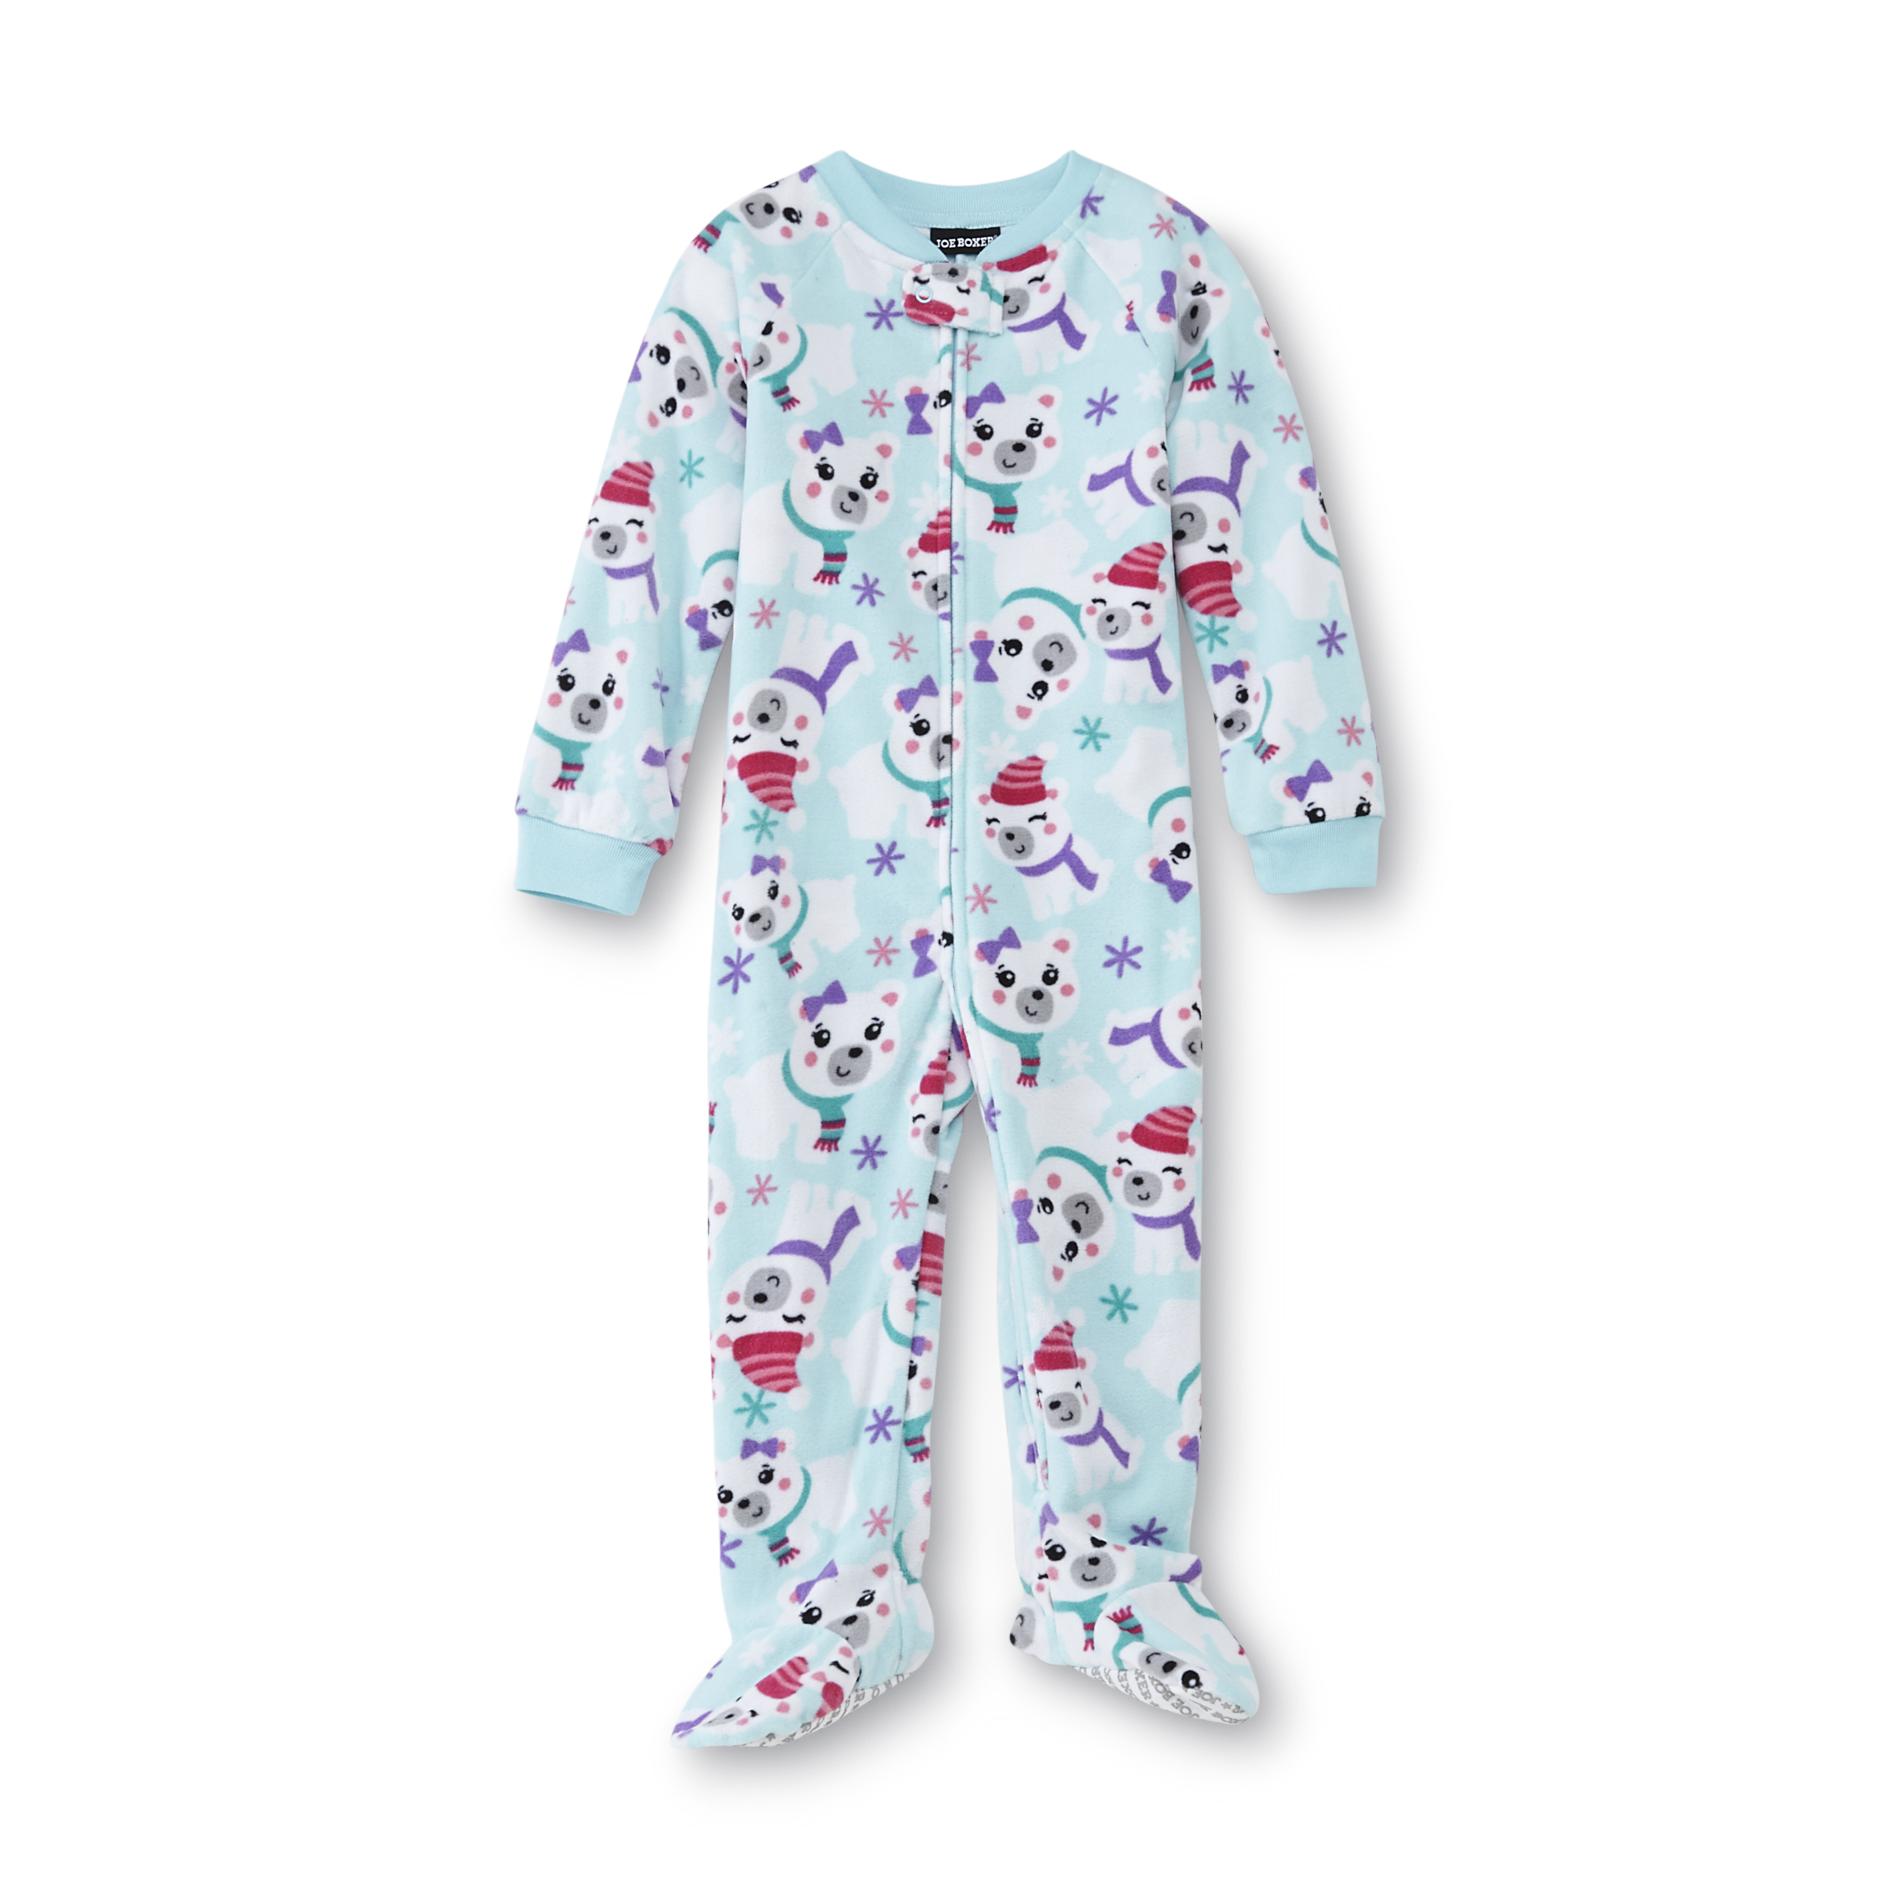 Joe Boxer Infant & Toddler Girl's Fleece Footed Pajamas - Polar Bears